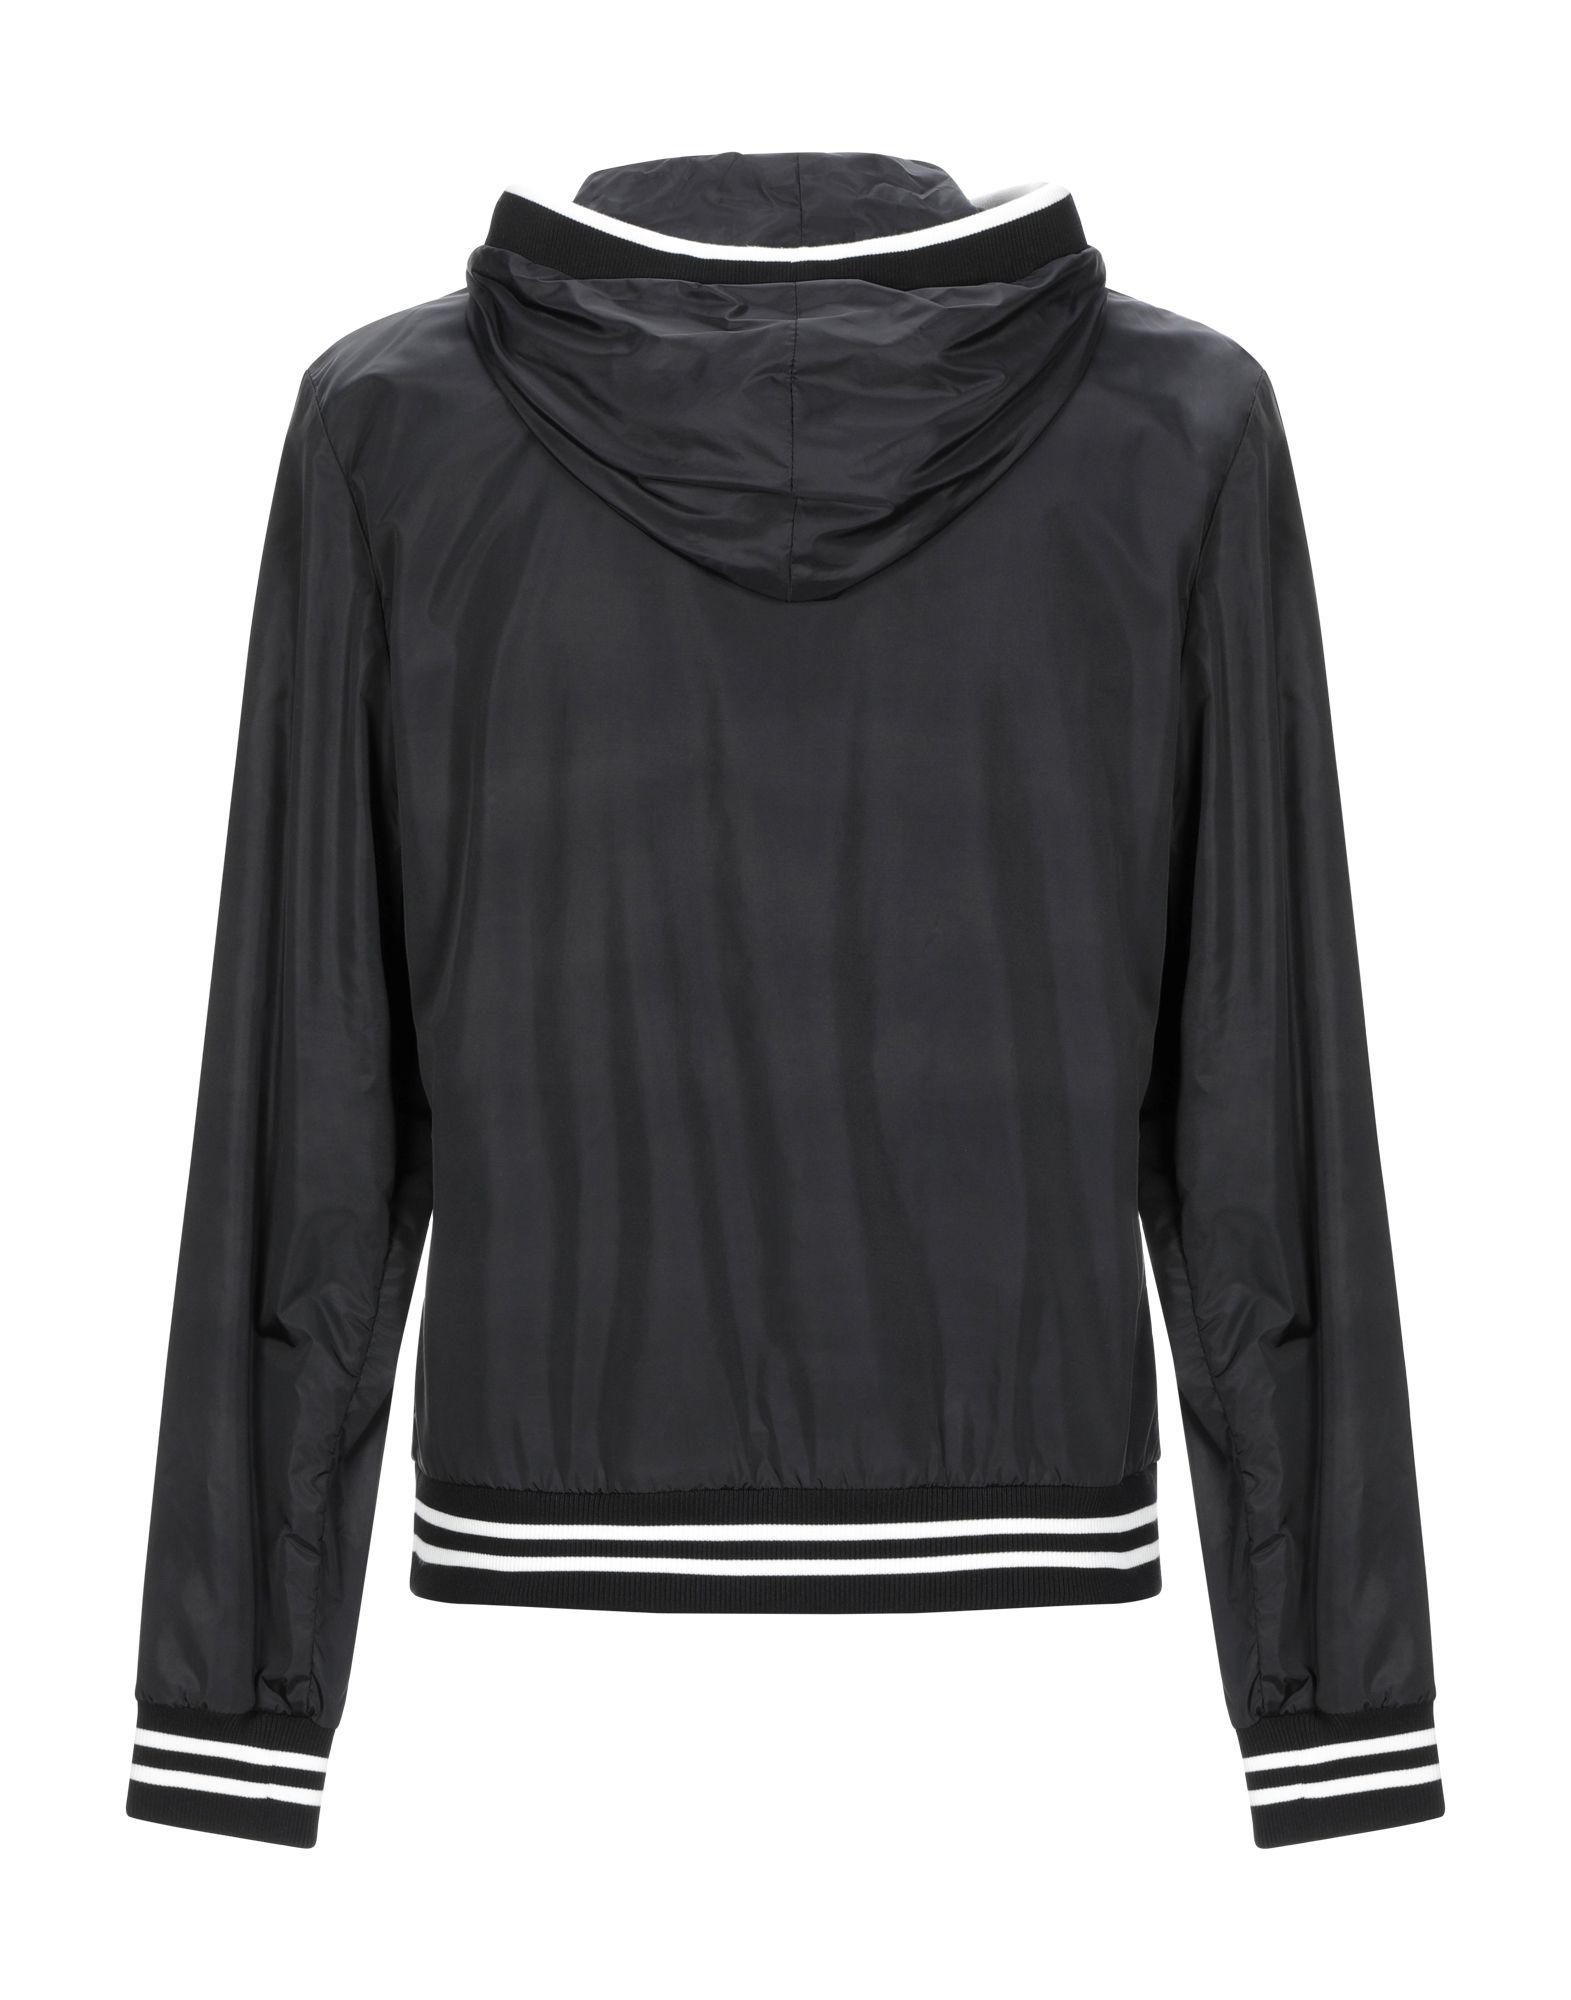 Dolce & Gabbana Synthetic Jacket in Black for Men - Lyst